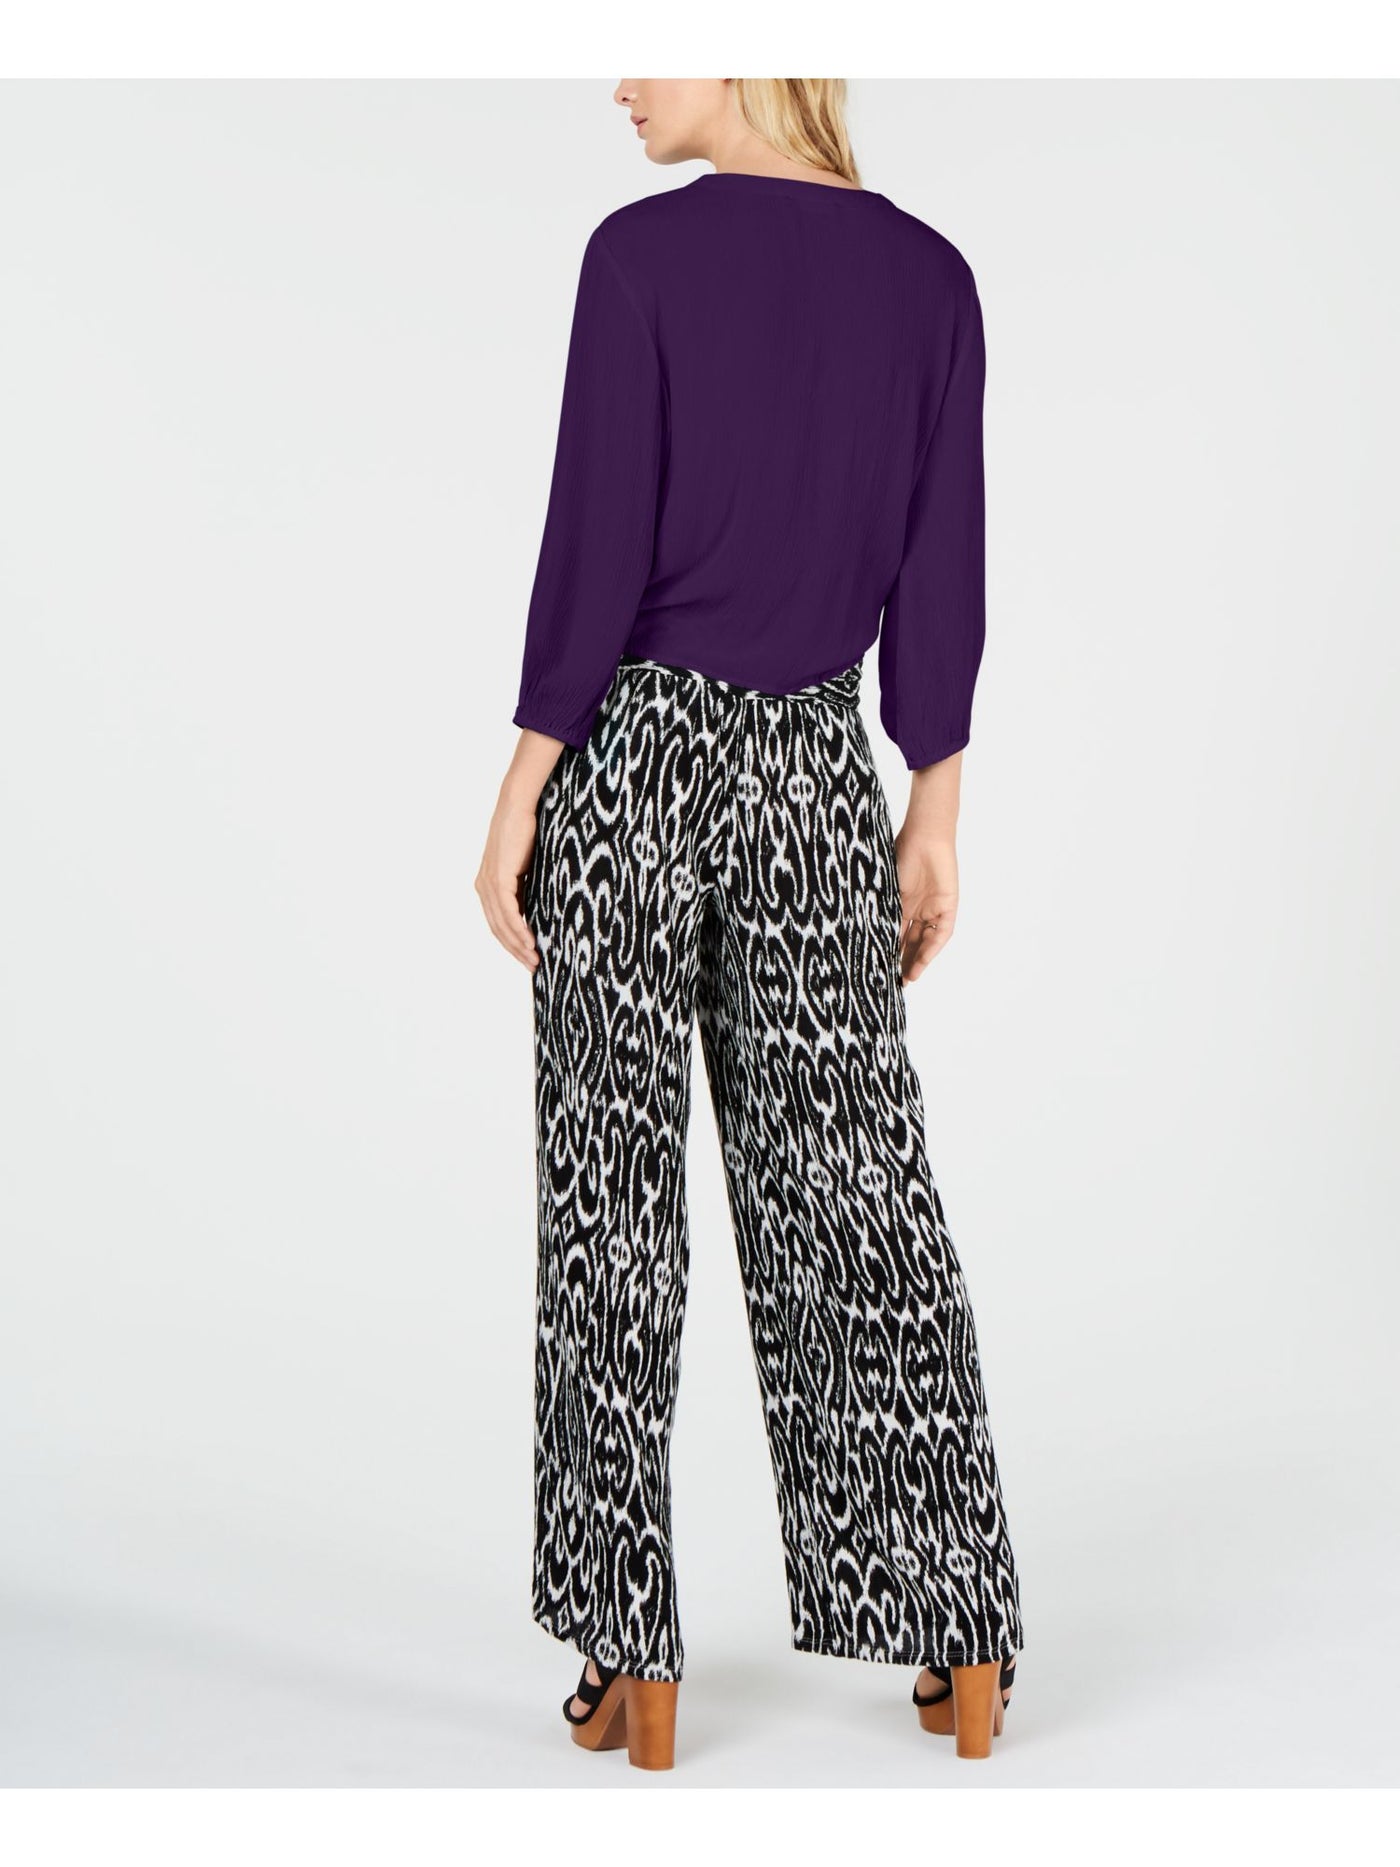 INC Womens Purple Long Sleeve V Neck Crop Top Size: M